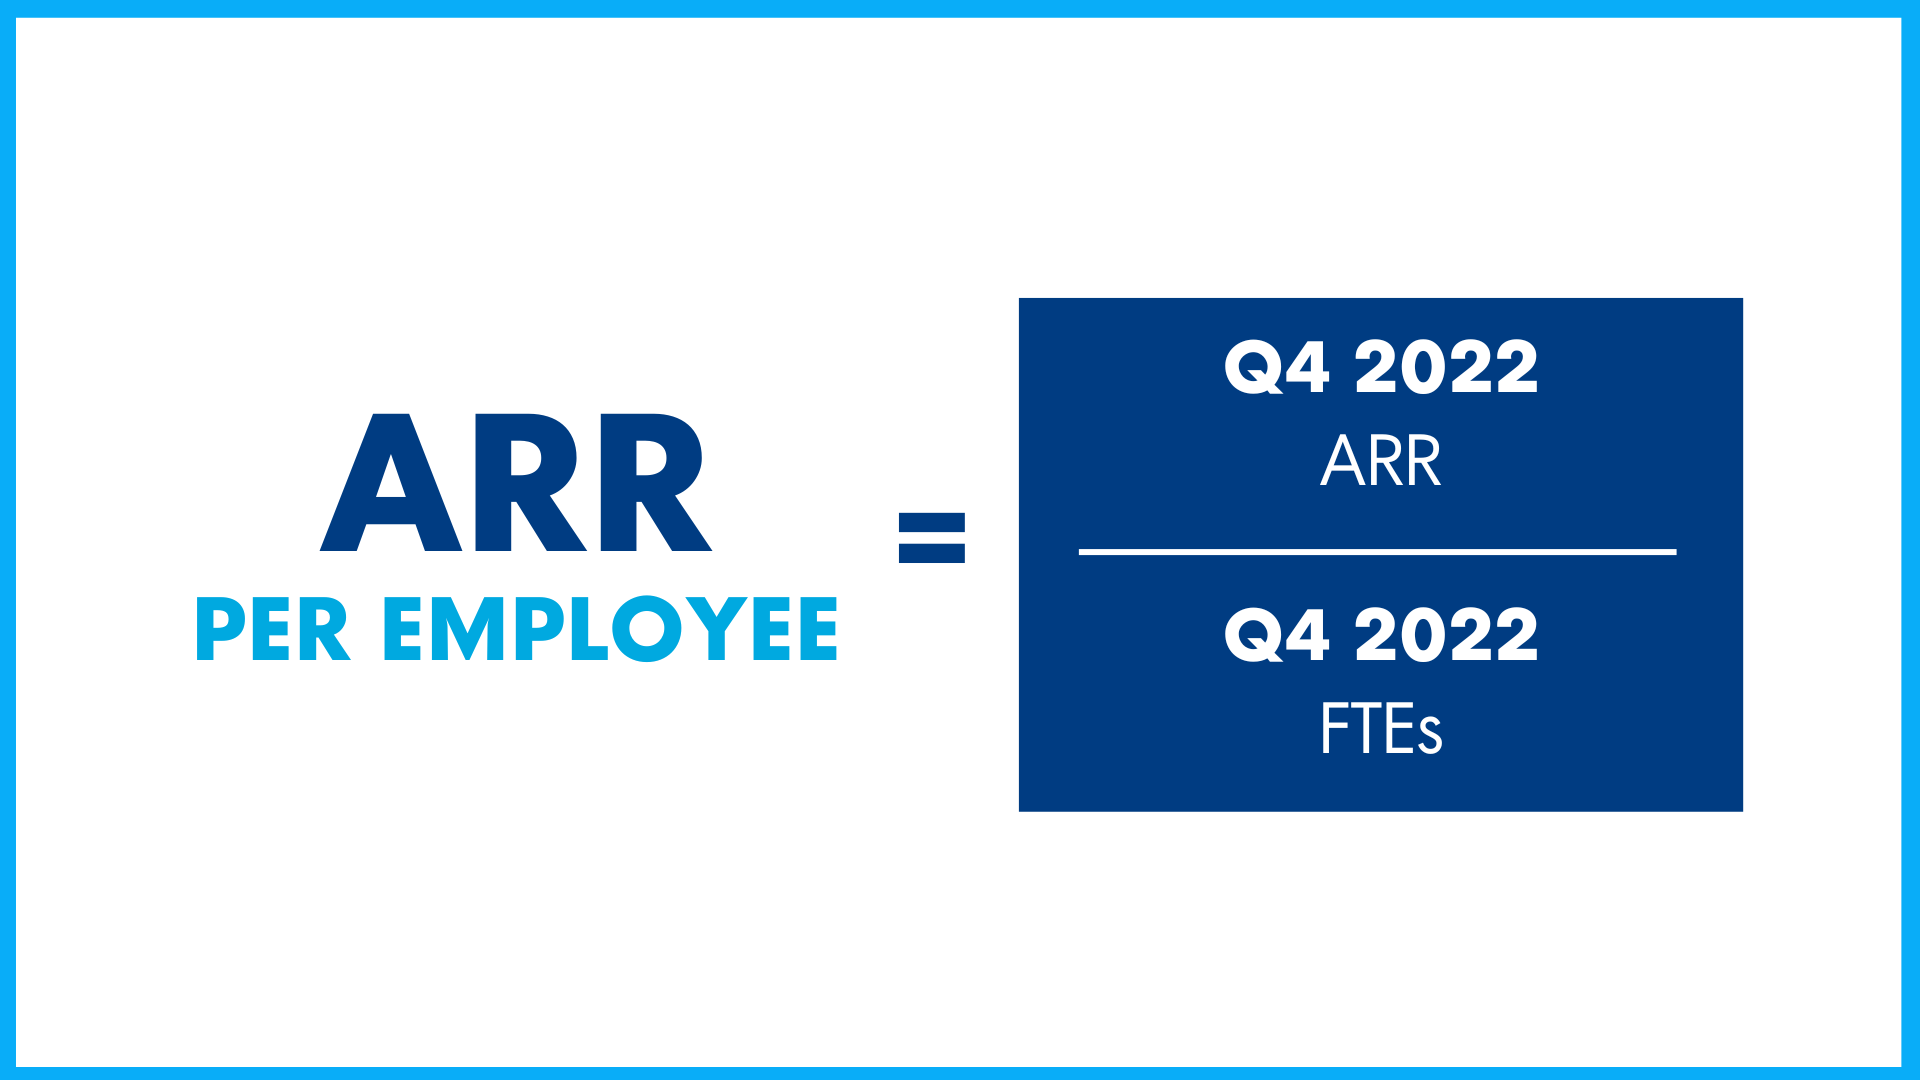 Infographic explaining the ARR formula per employee.